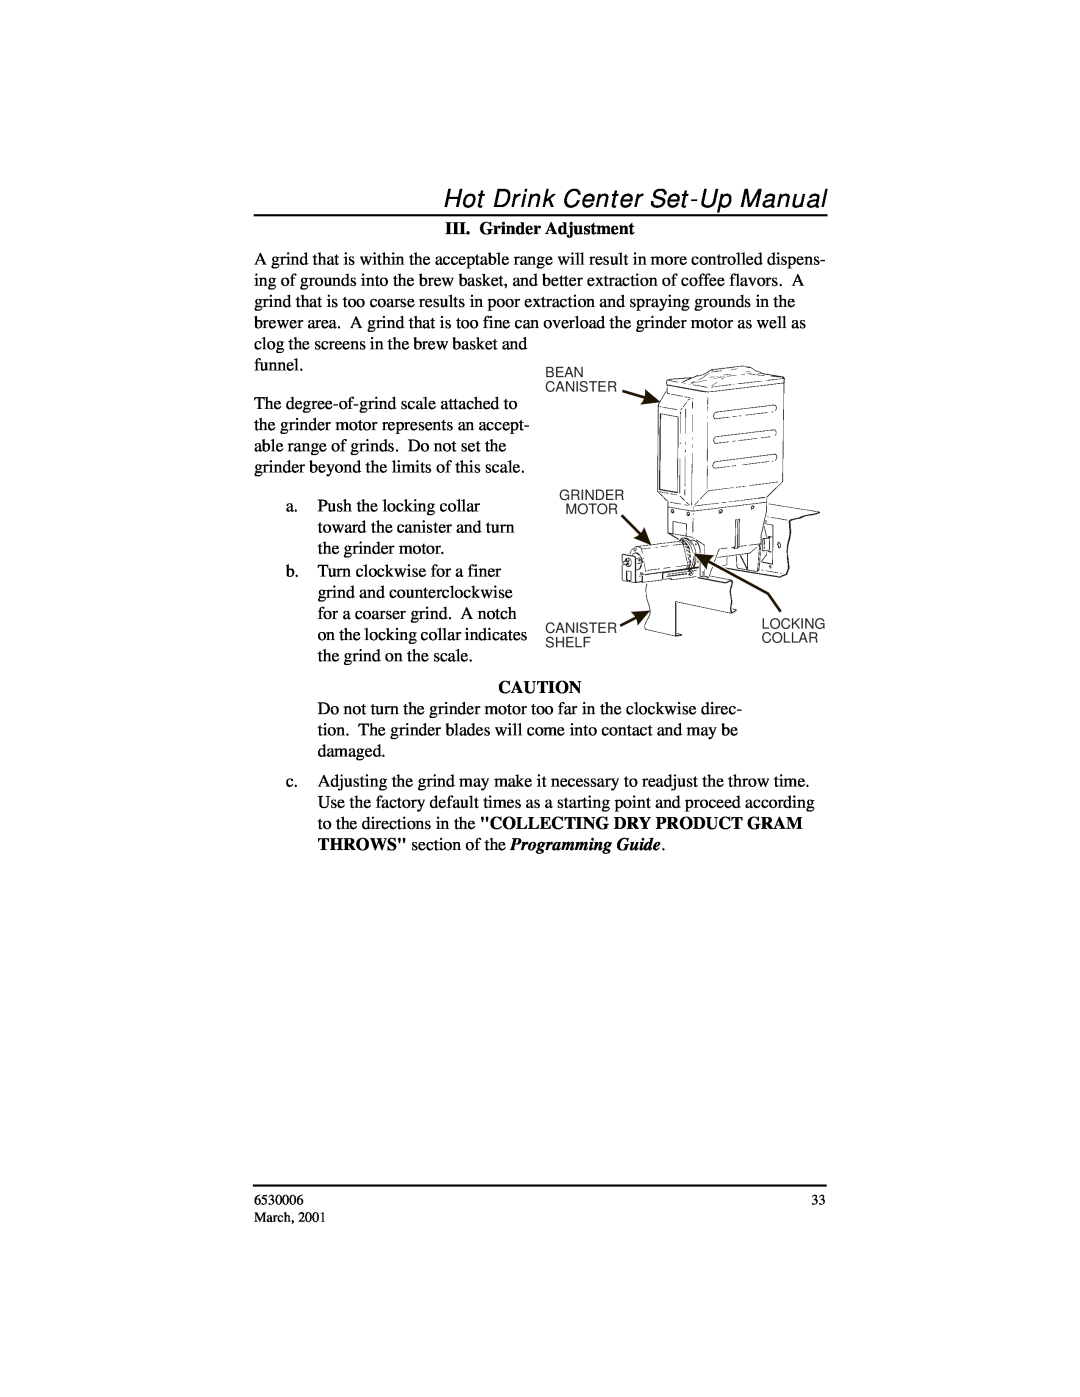 Crane Merchandising Systems 6530006 manual Hot Drink Center Set-Up Manual, III. Grinder Adjustment 